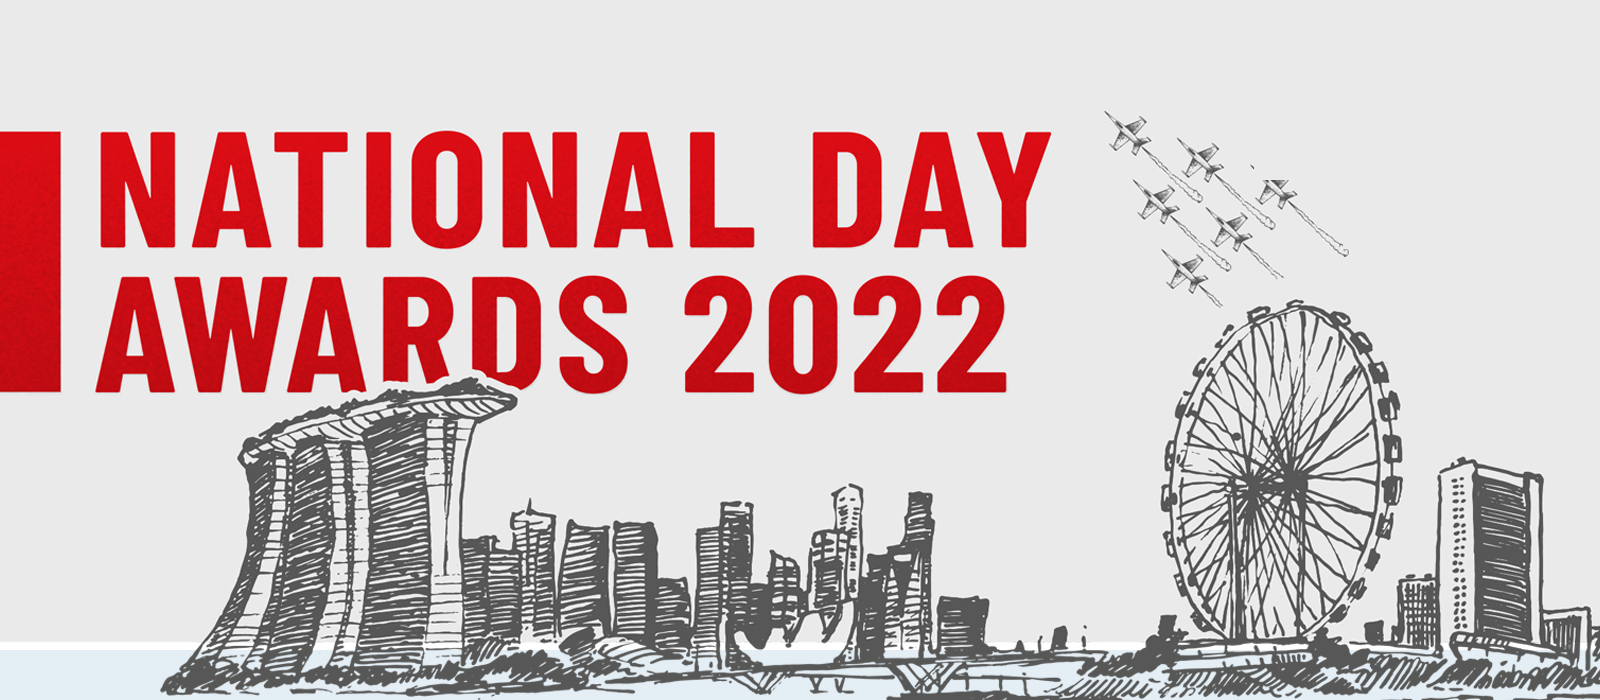 National Day Awards 2022